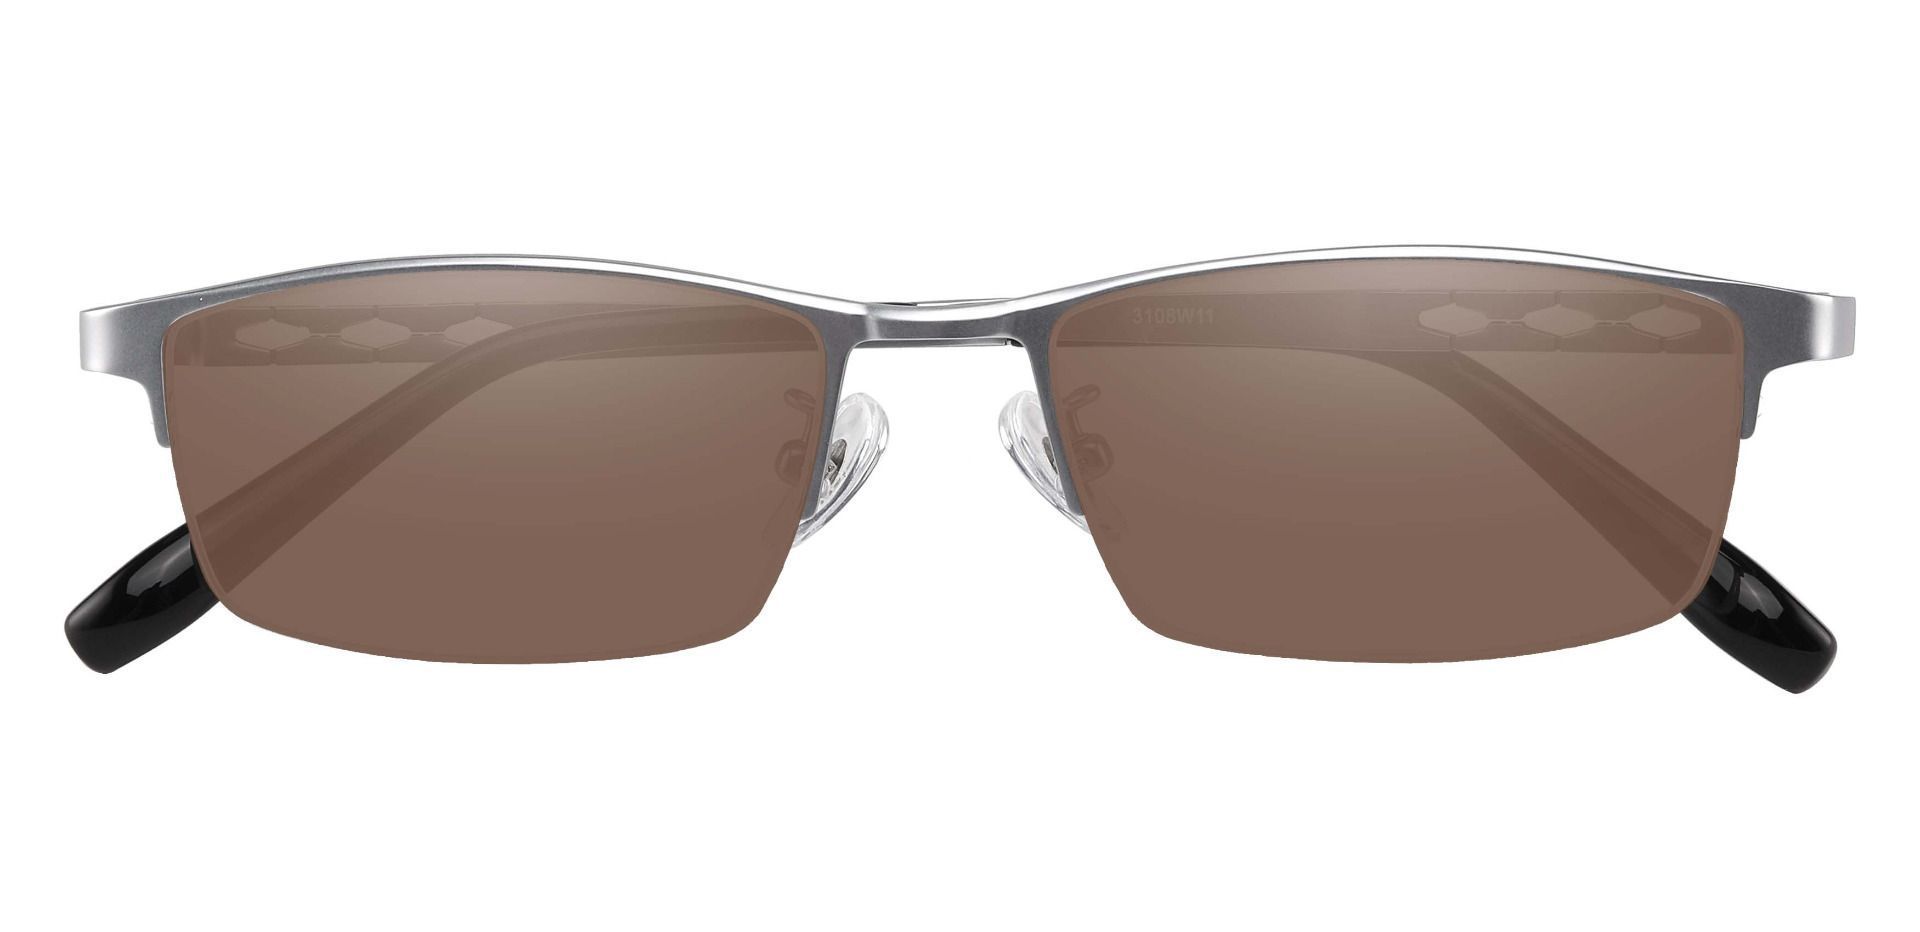 Burlington Rectangle Reading Sunglasses - Silver Frame With Brown Lenses